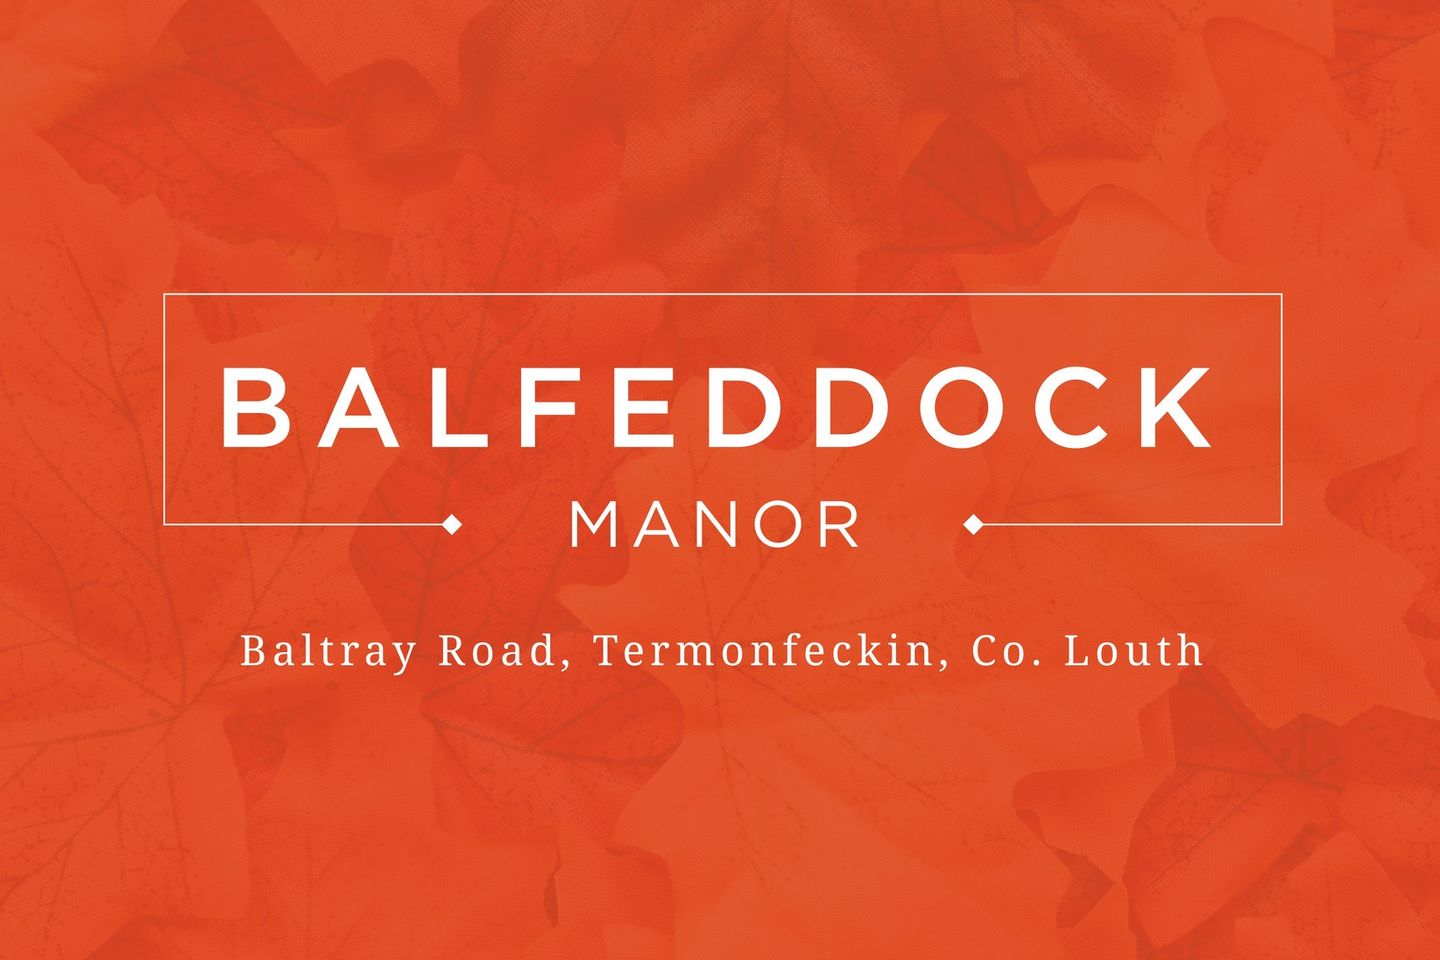 The Oak , Balfeddock Manor, Balfeddock Manor, Baltray Road, Termonfeckin, Co. Louth